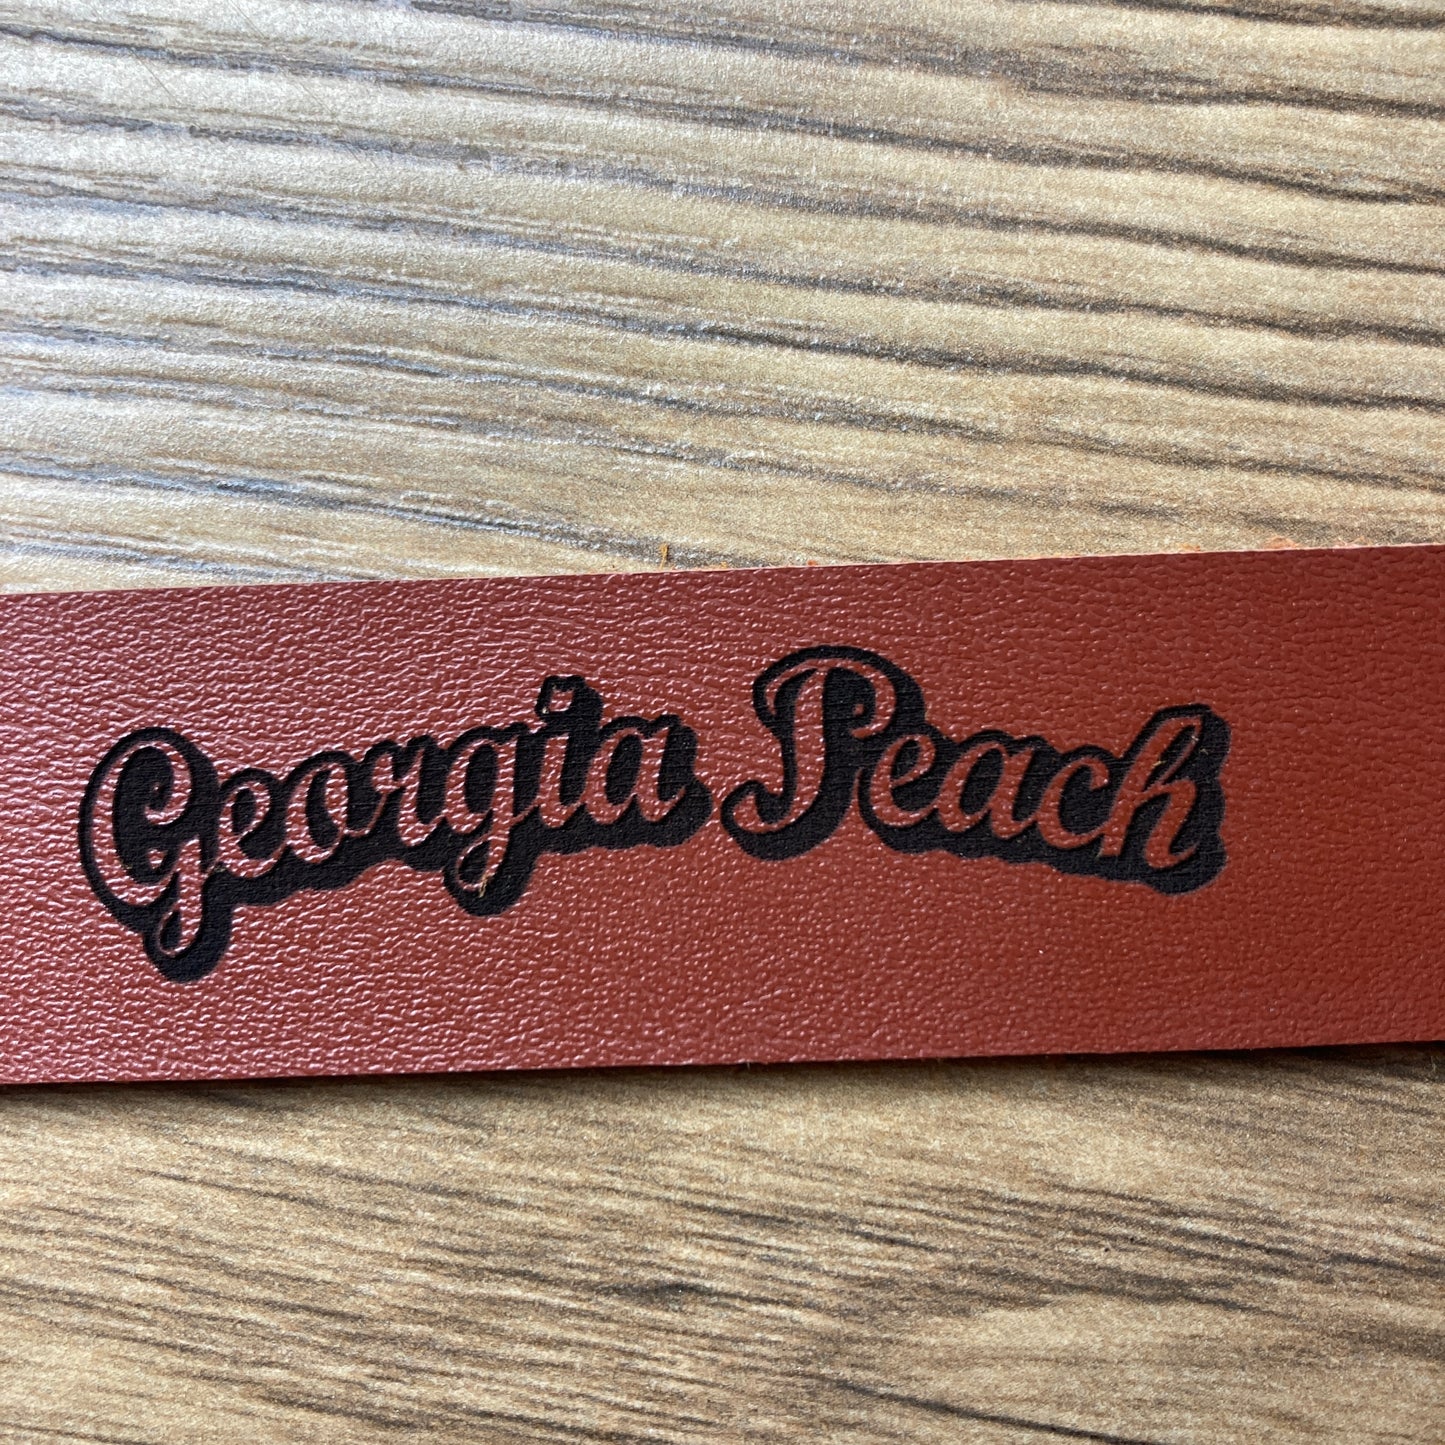 Georgia Peach Leather Keychain